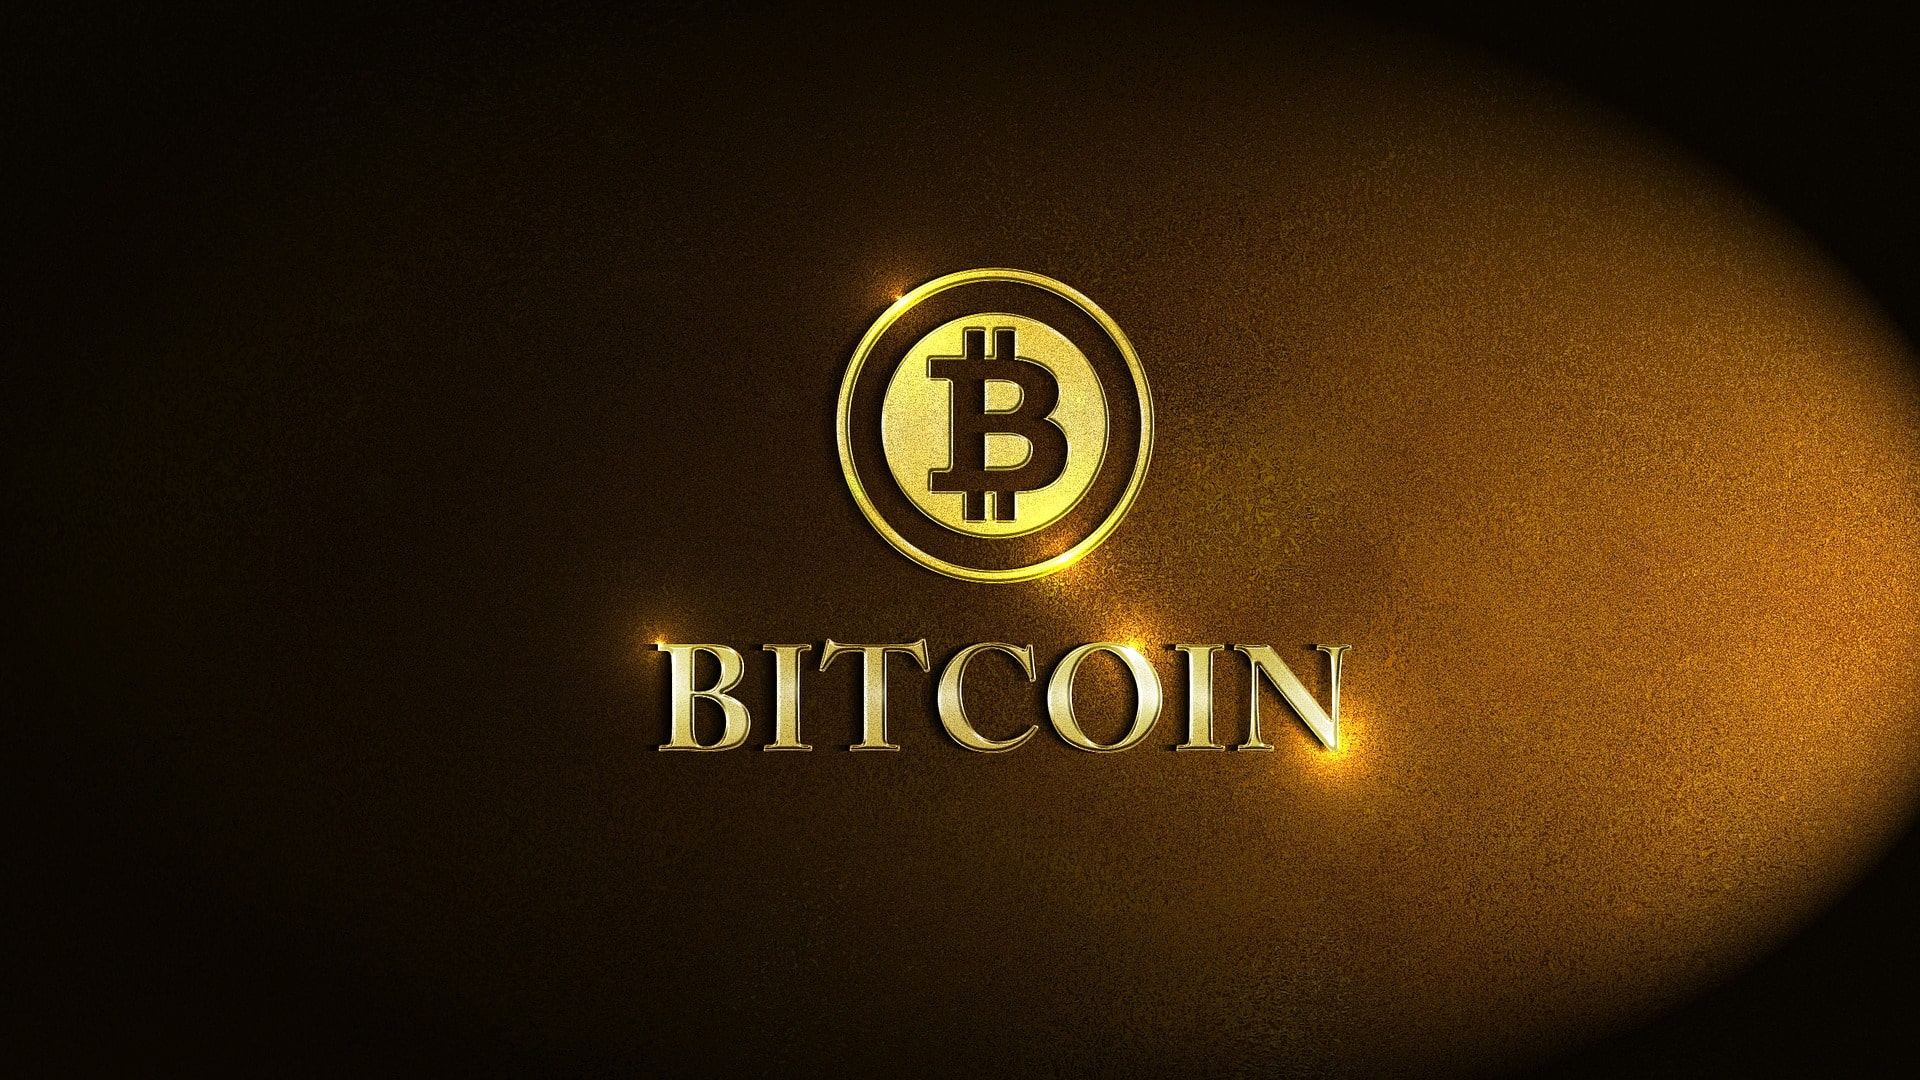 The BTC logo with the word Bitcoin